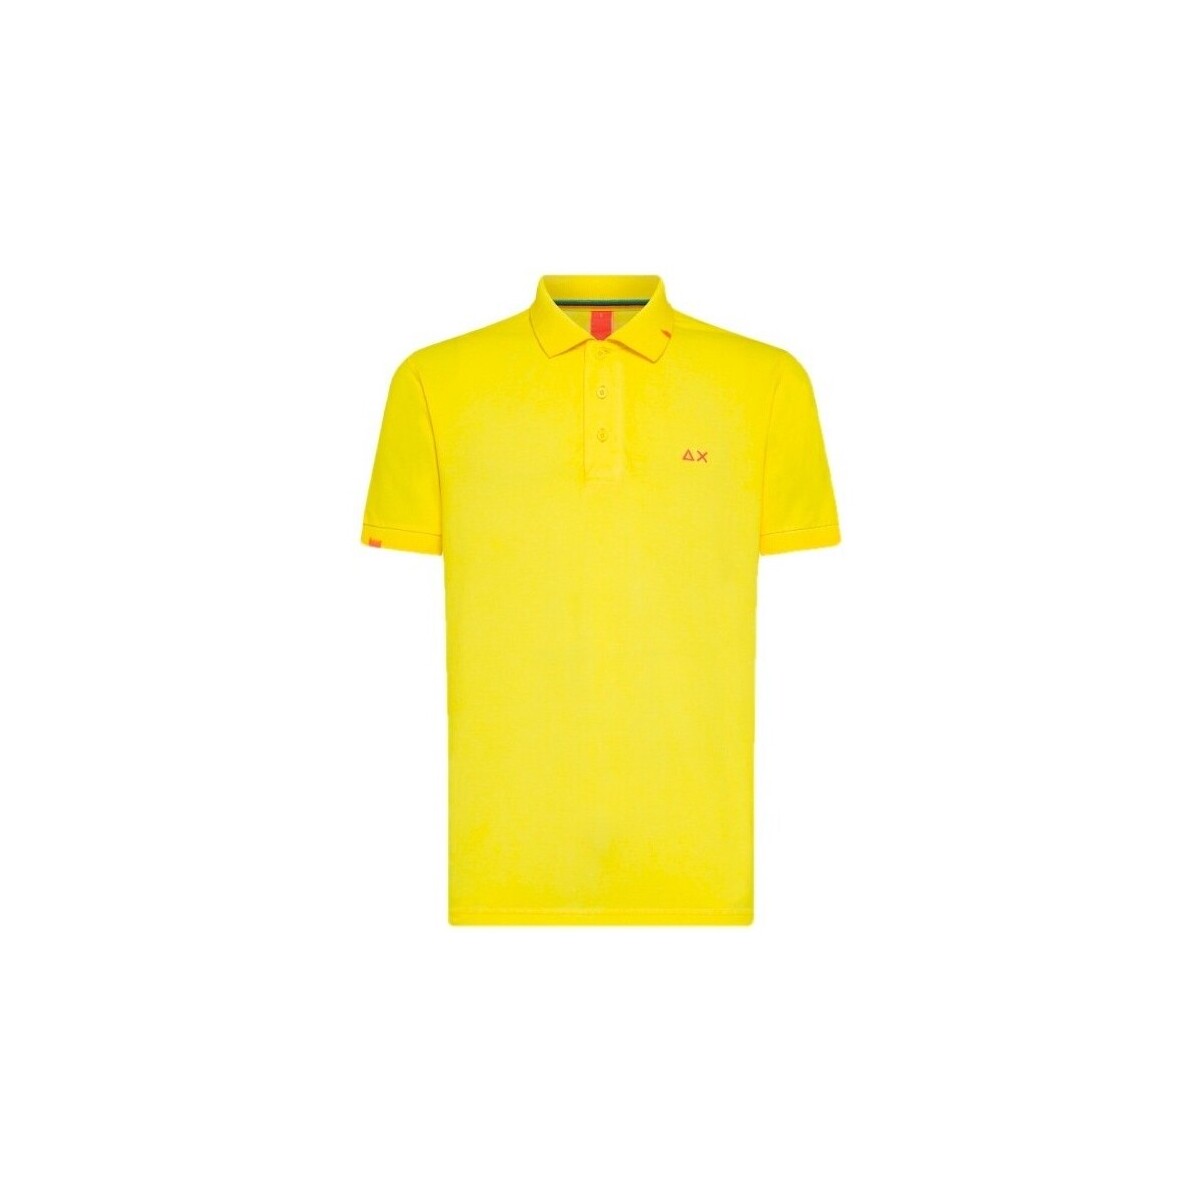 Vêtements Homme two-tone wool-blend ISABEL Polo shirt ISABEL Polo jaune teint spcial Jaune